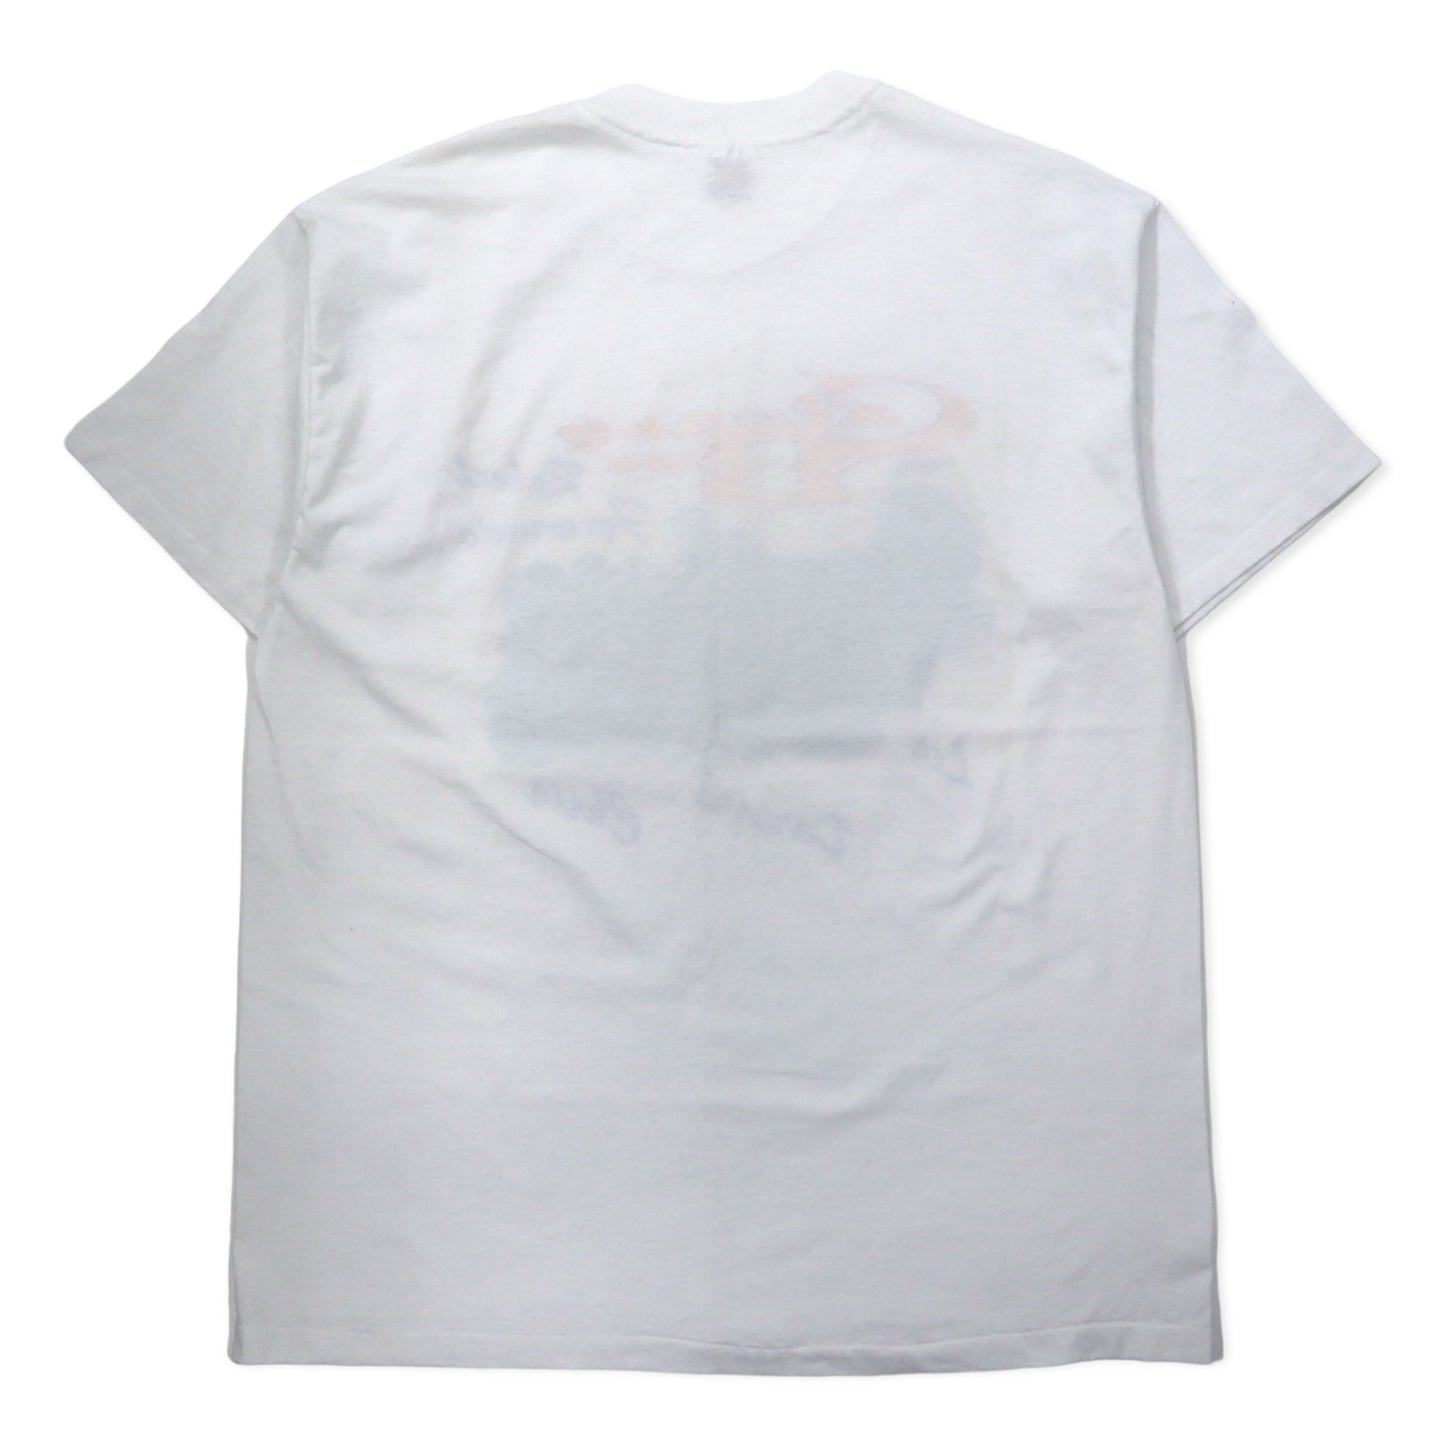 Hanes USA Made 90's Print T-Shirt XL White Cotton HEAVYWEIGHT 50/50  Southern Basics